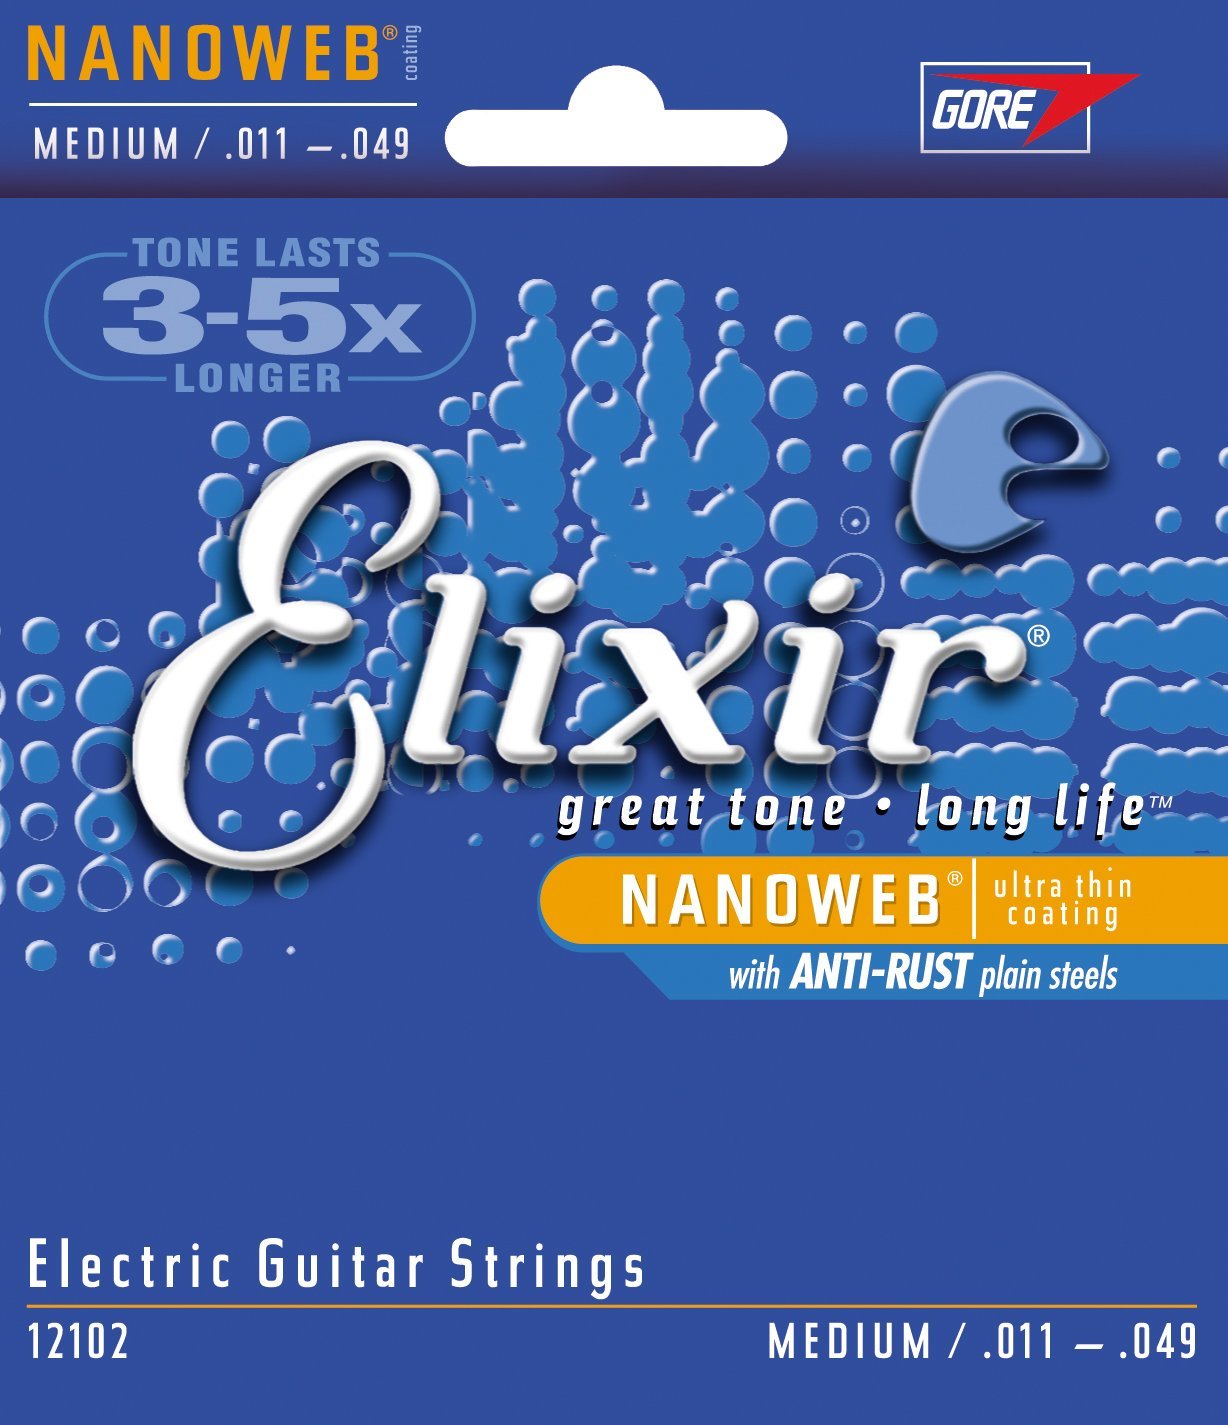 Elixir 12102 Electric Guitar Strings with NANOWEB Coating, Medium (.011-.049)